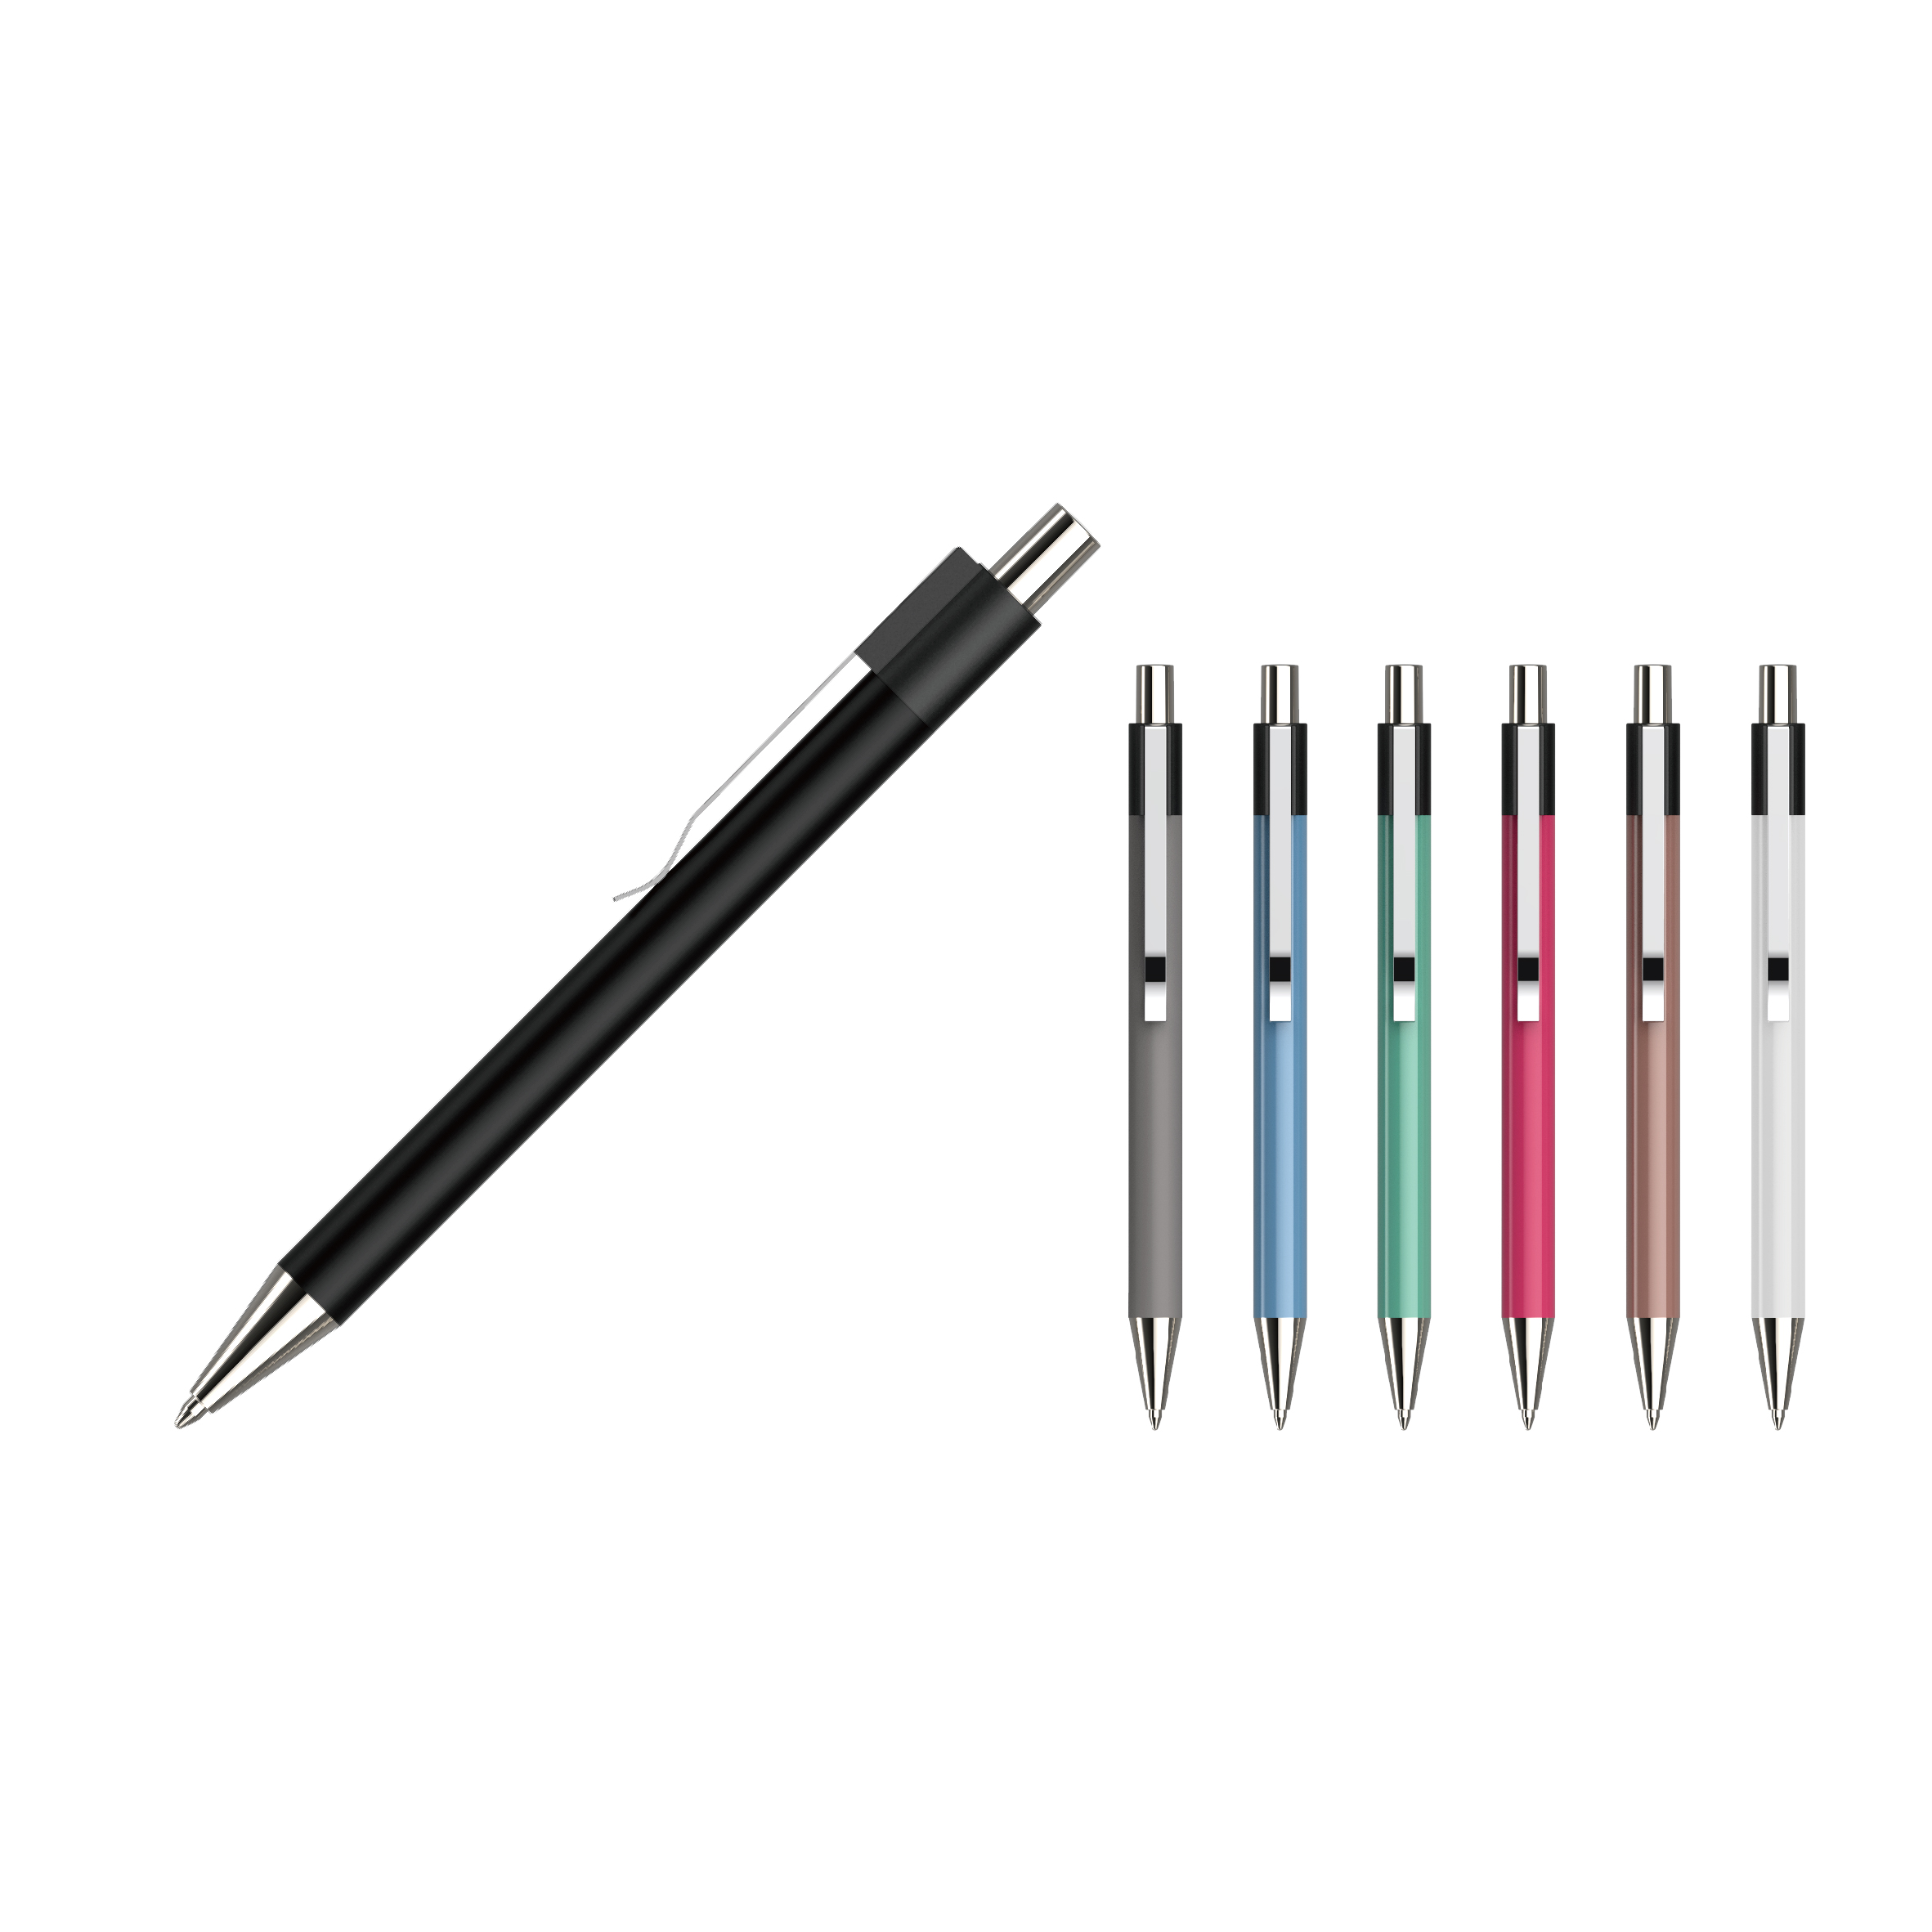 Press Retractable Metal Pen Point Ball Pen with Metal Clip, 0.7/1.0mm